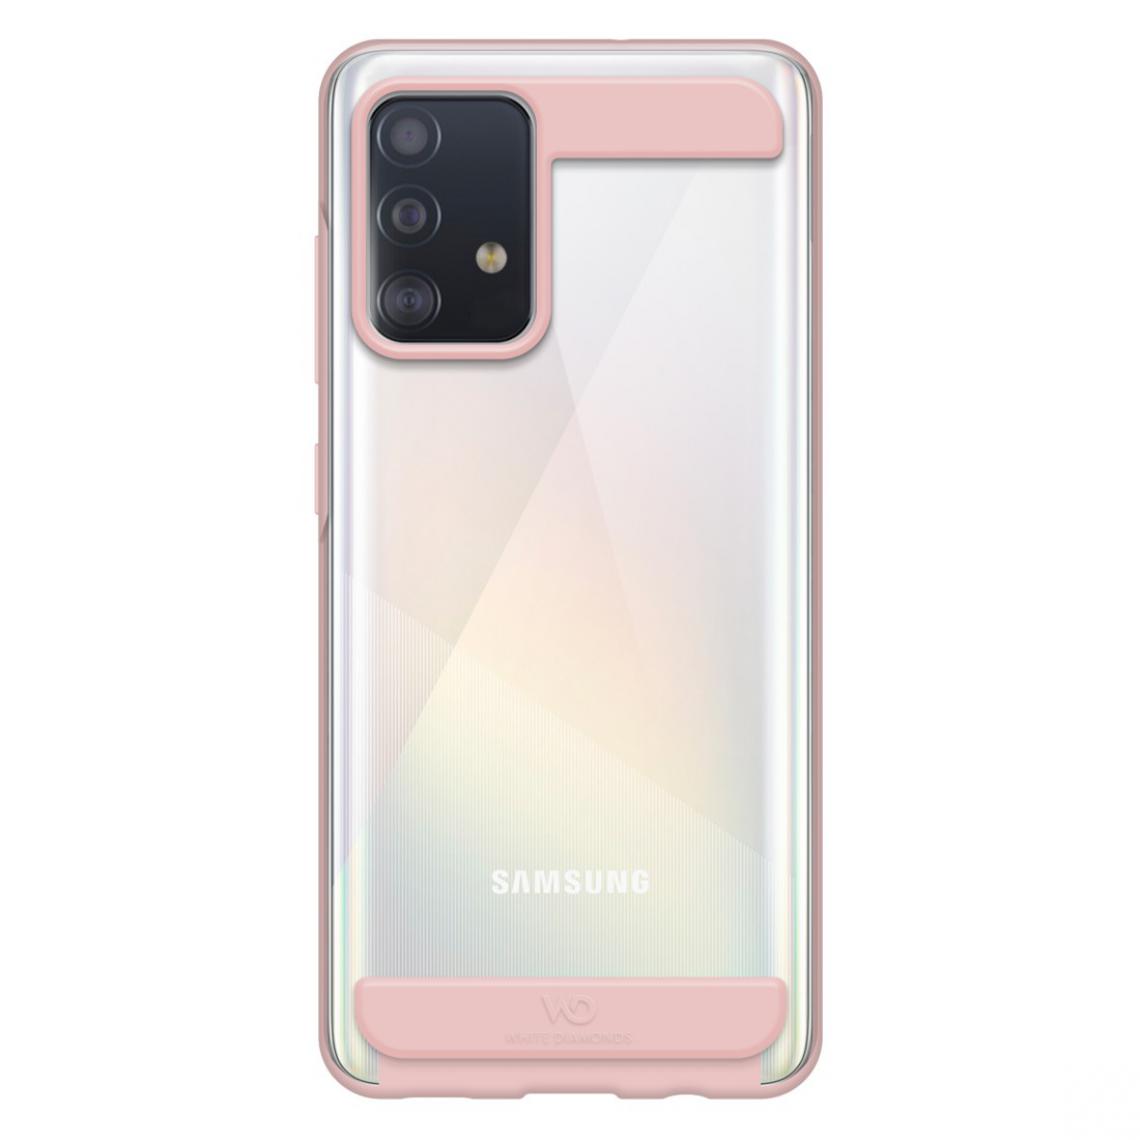 White Diamonds - Coque de protection "Innocence Clear" pour Samsung Galaxy A52 5G, or rose - Coque, étui smartphone